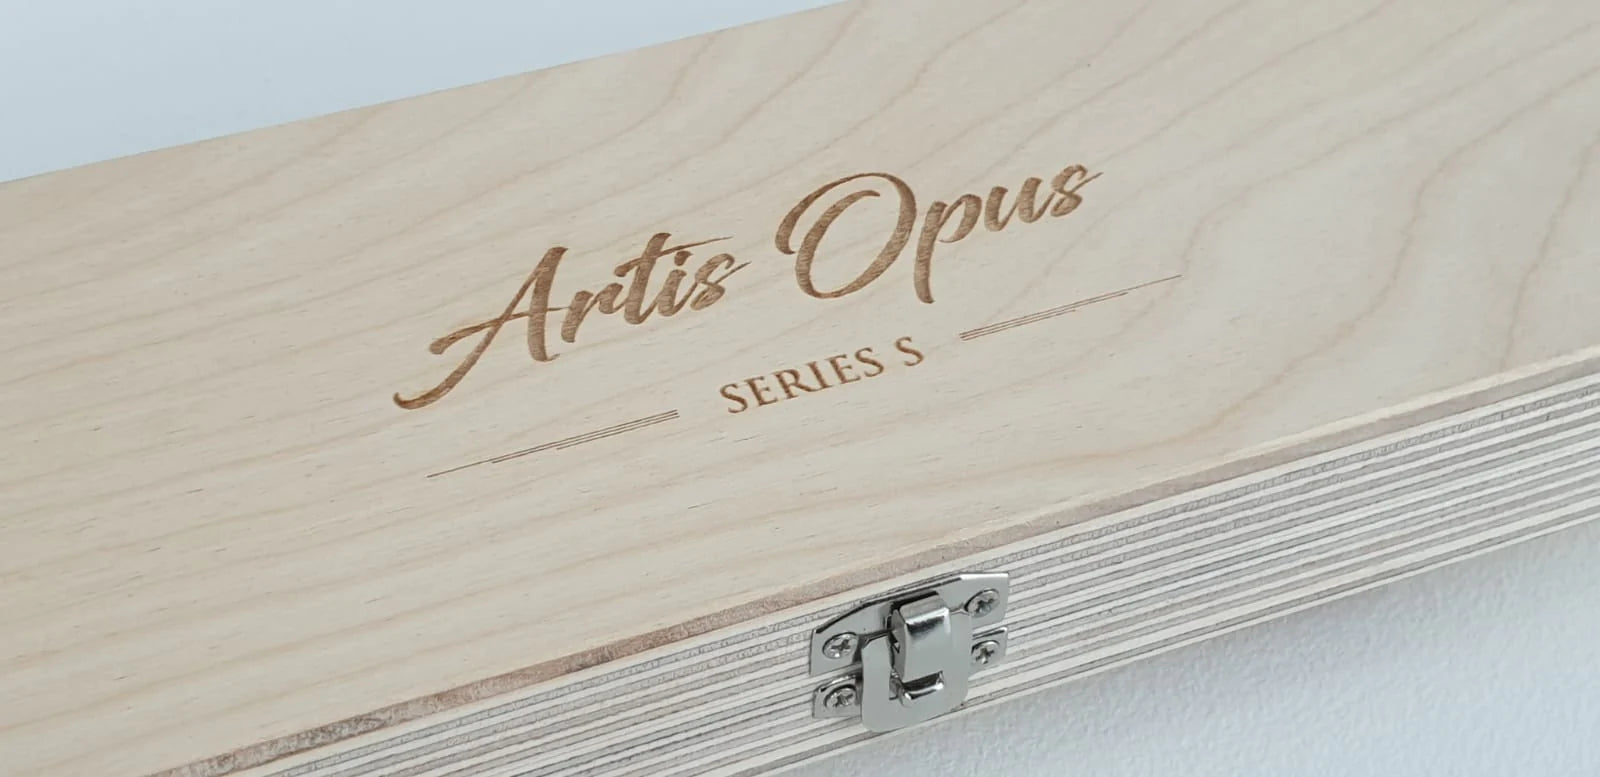 Artis Opus: Series S Paint Brush Showcase 